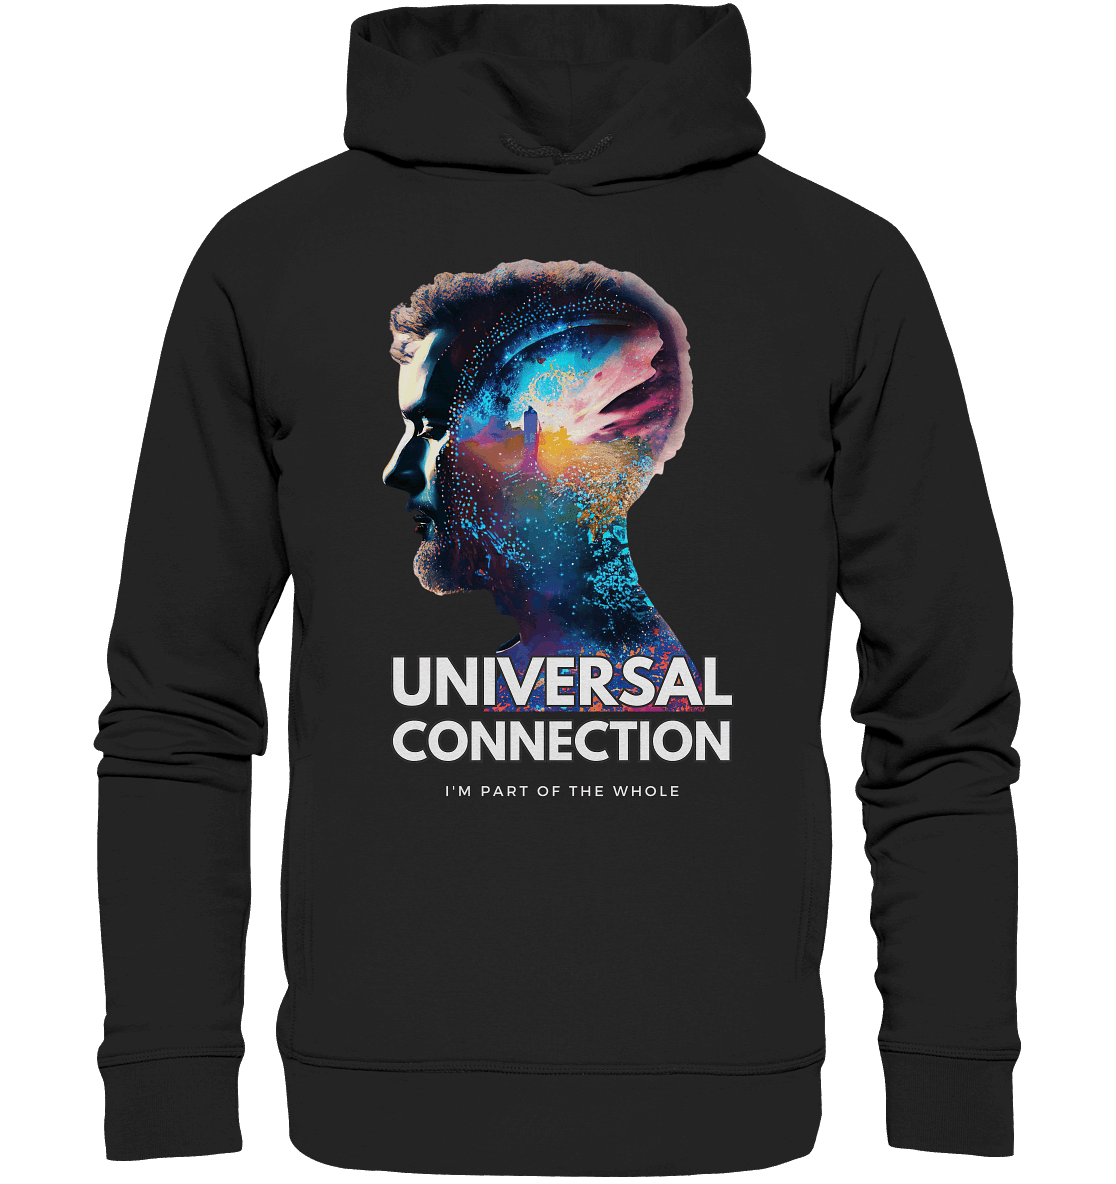 Universal Connection - Organic Fashion Hoodie